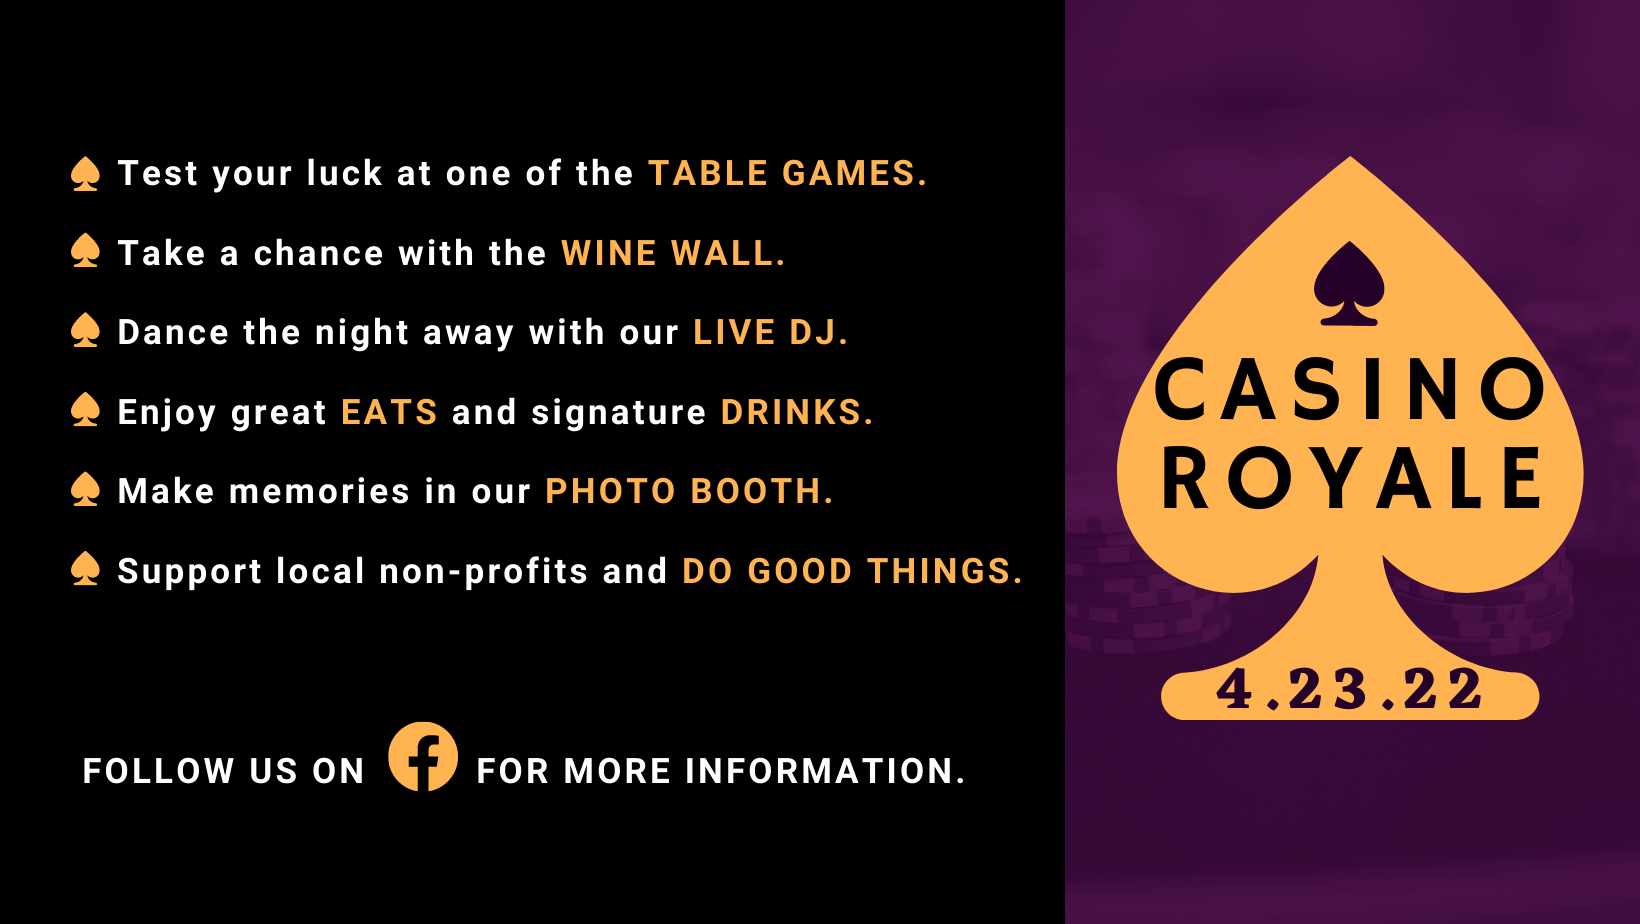 Casino Night 2022 details